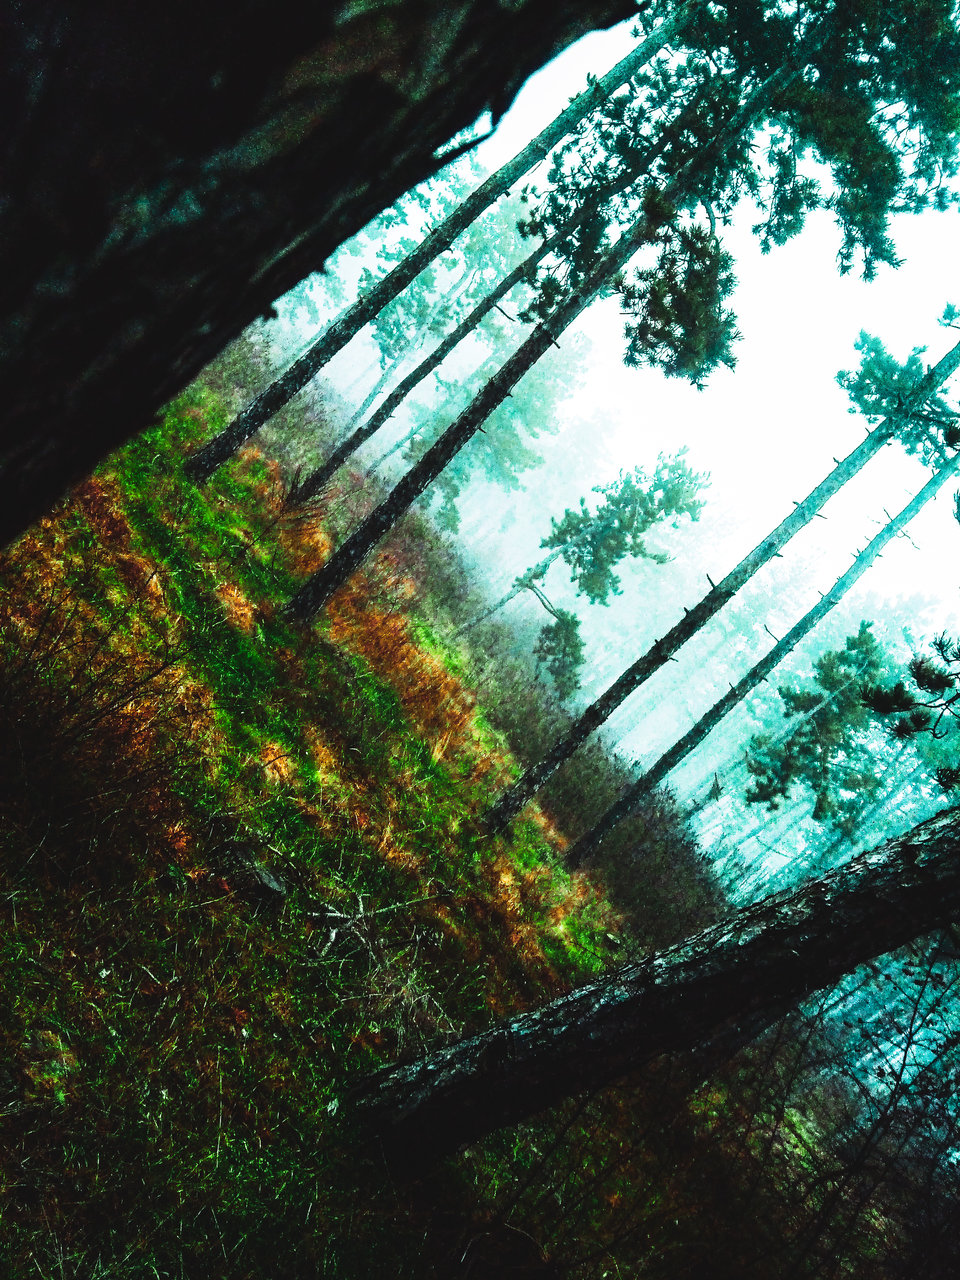 Foggy day in the wood | Author Zhelyazko Atanasow - Riderr | PHOTO FORUM